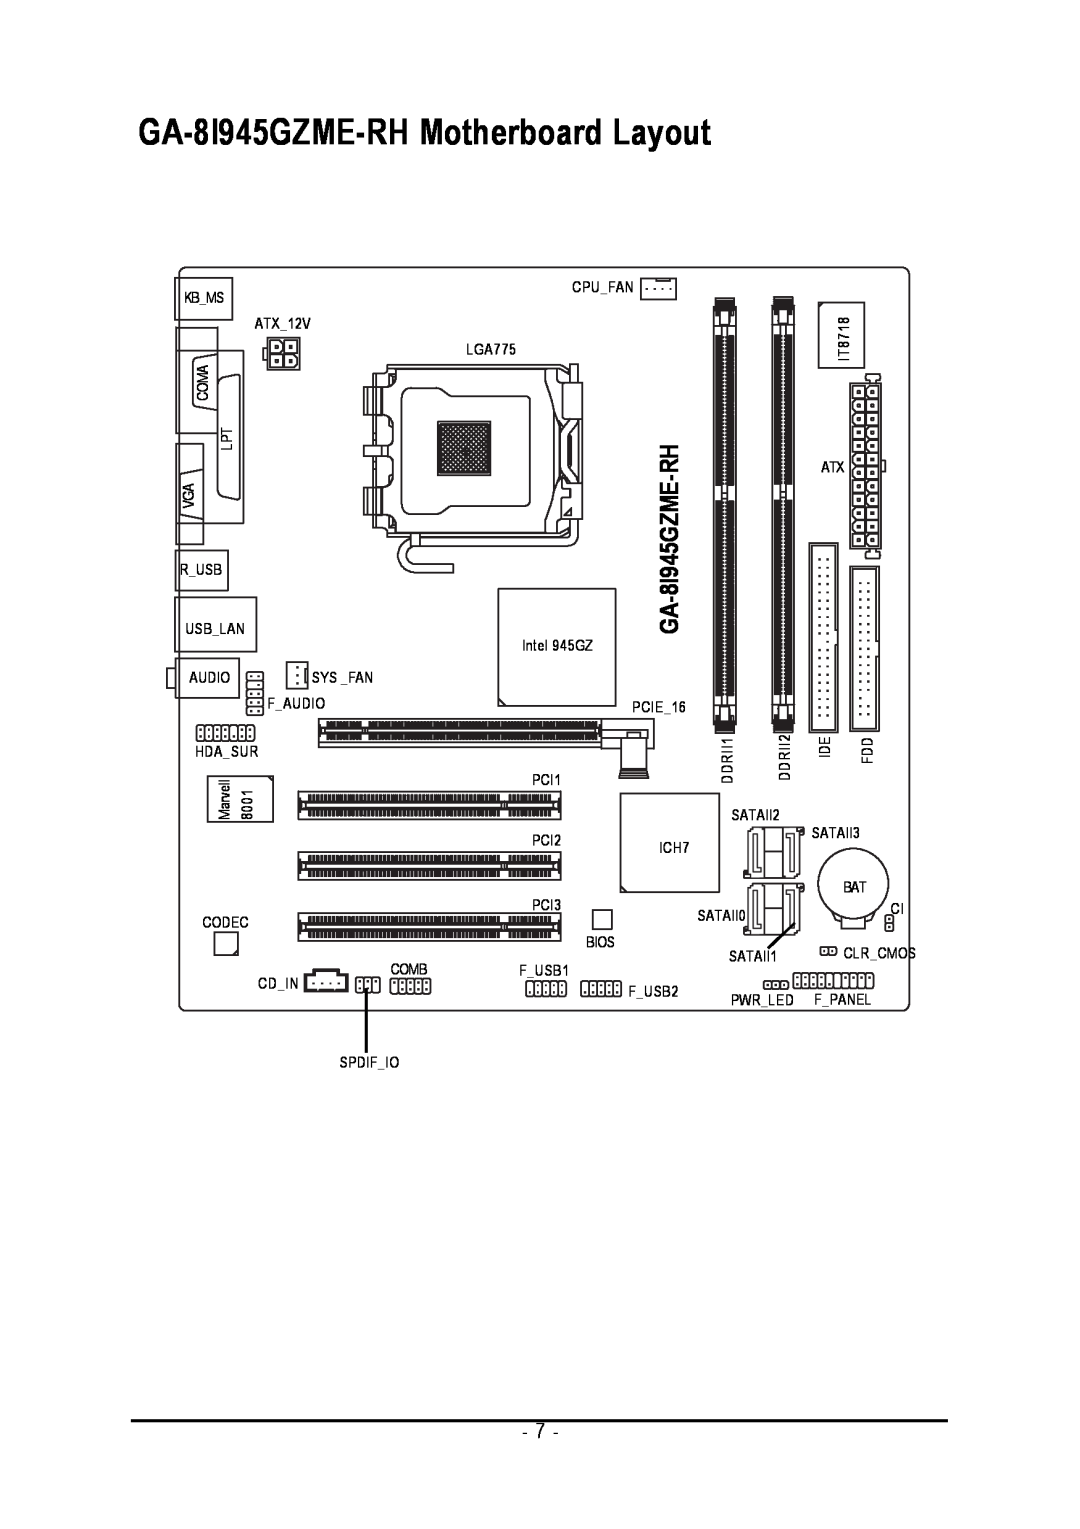 Intel user manual GA-8I945GZME-RH Motherboard Layout 